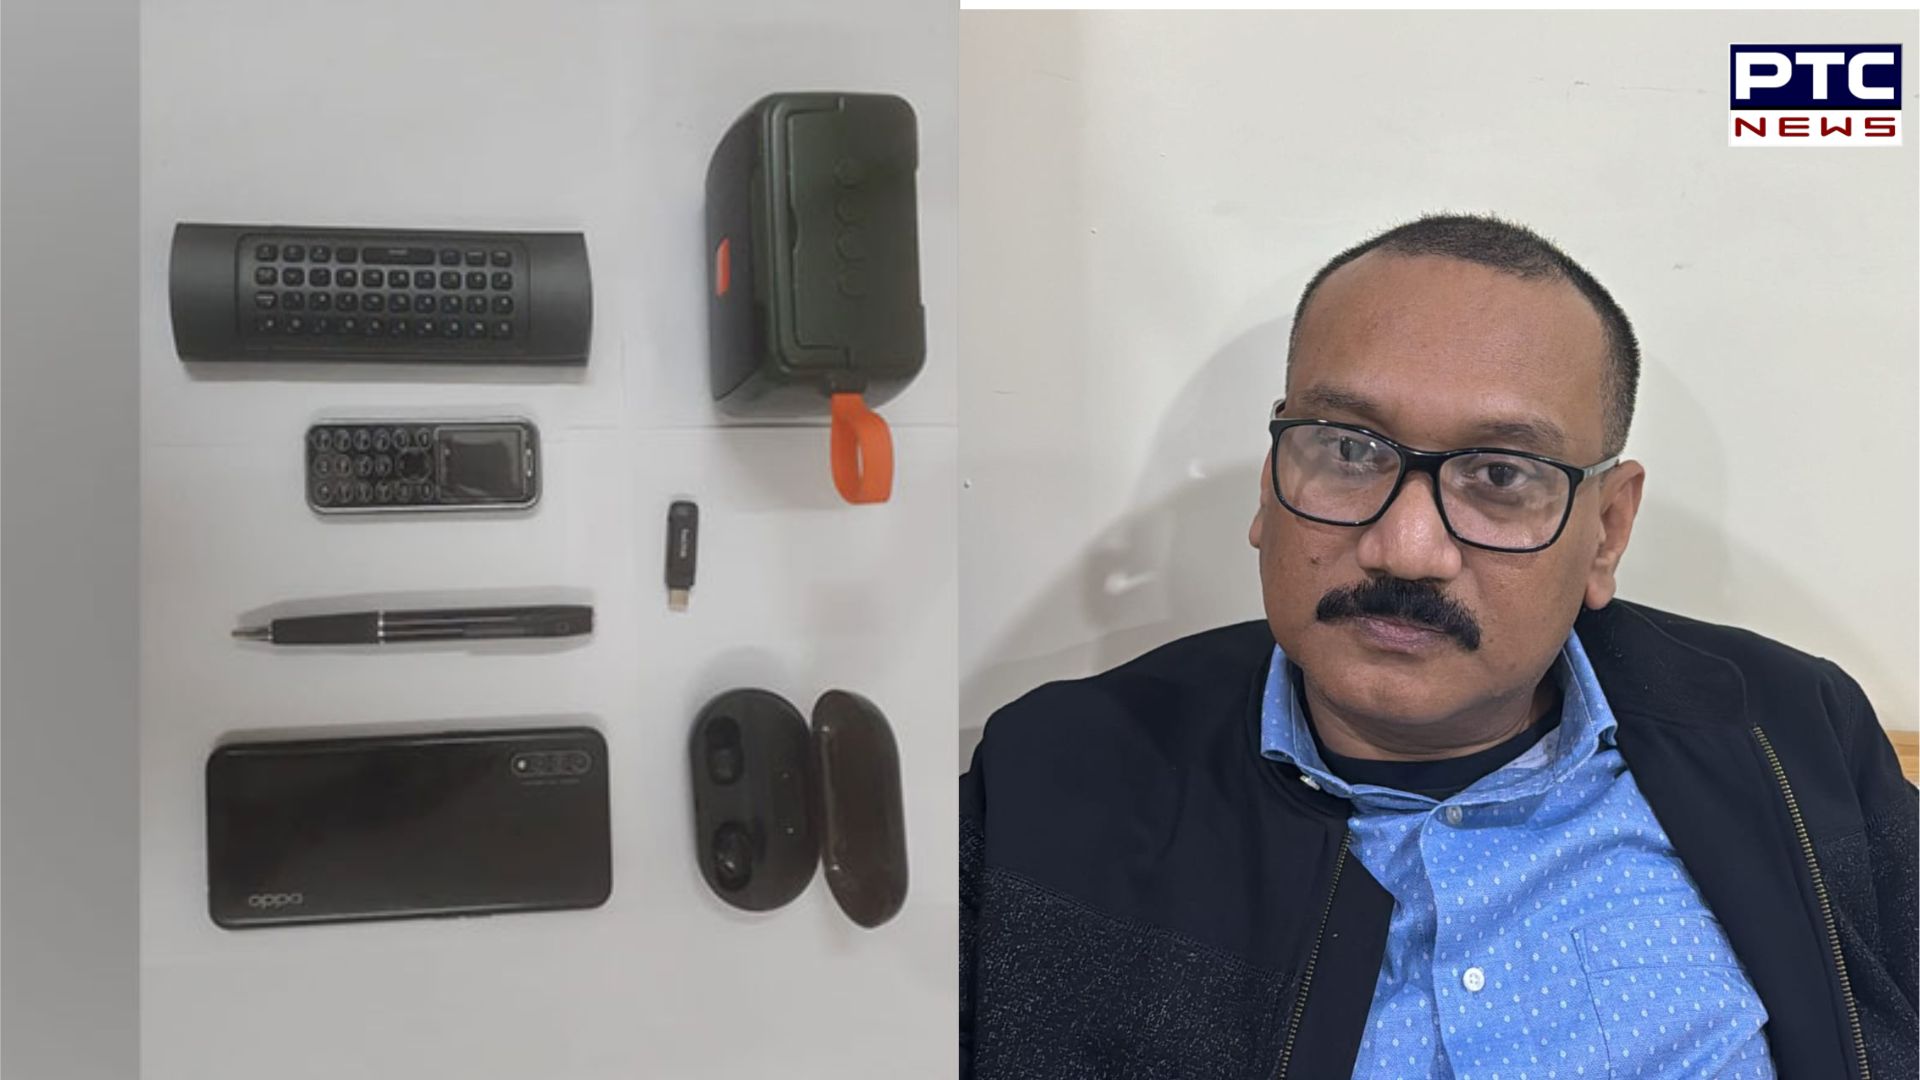 Dibrugarh Jail Superintendent Nipen Das held after spy camera, smartphone found in NSA cell